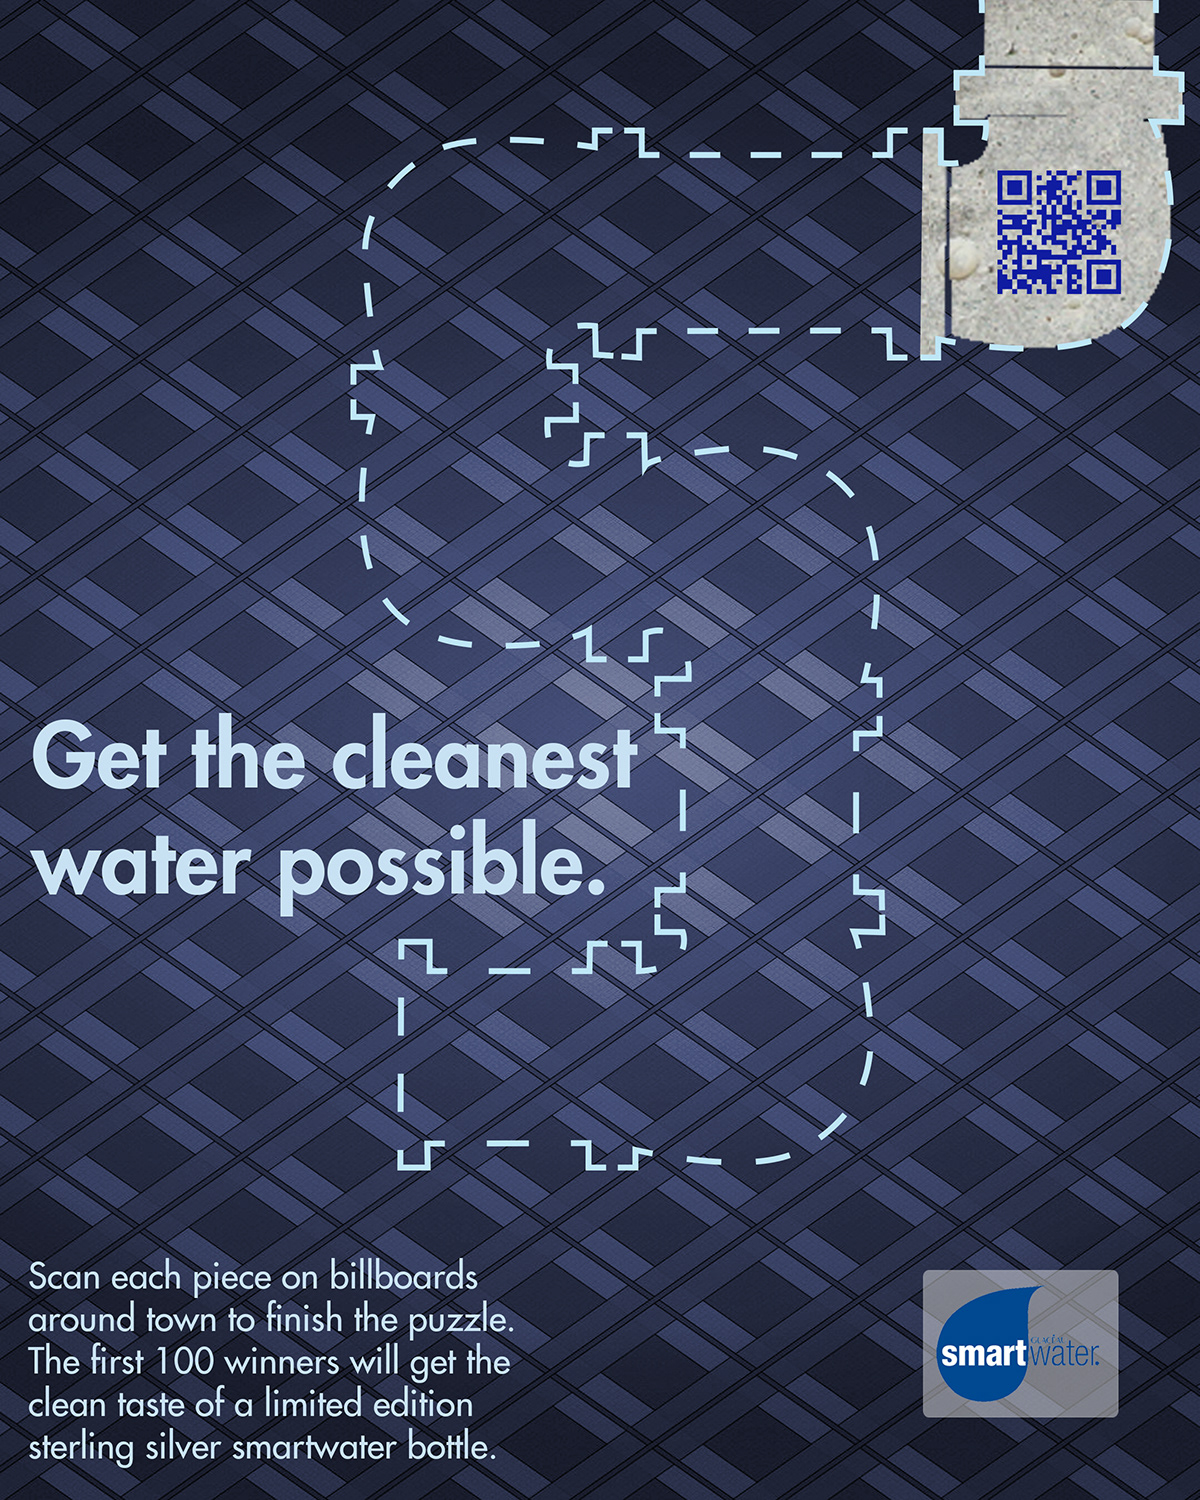 Smart Water mobile app billboard